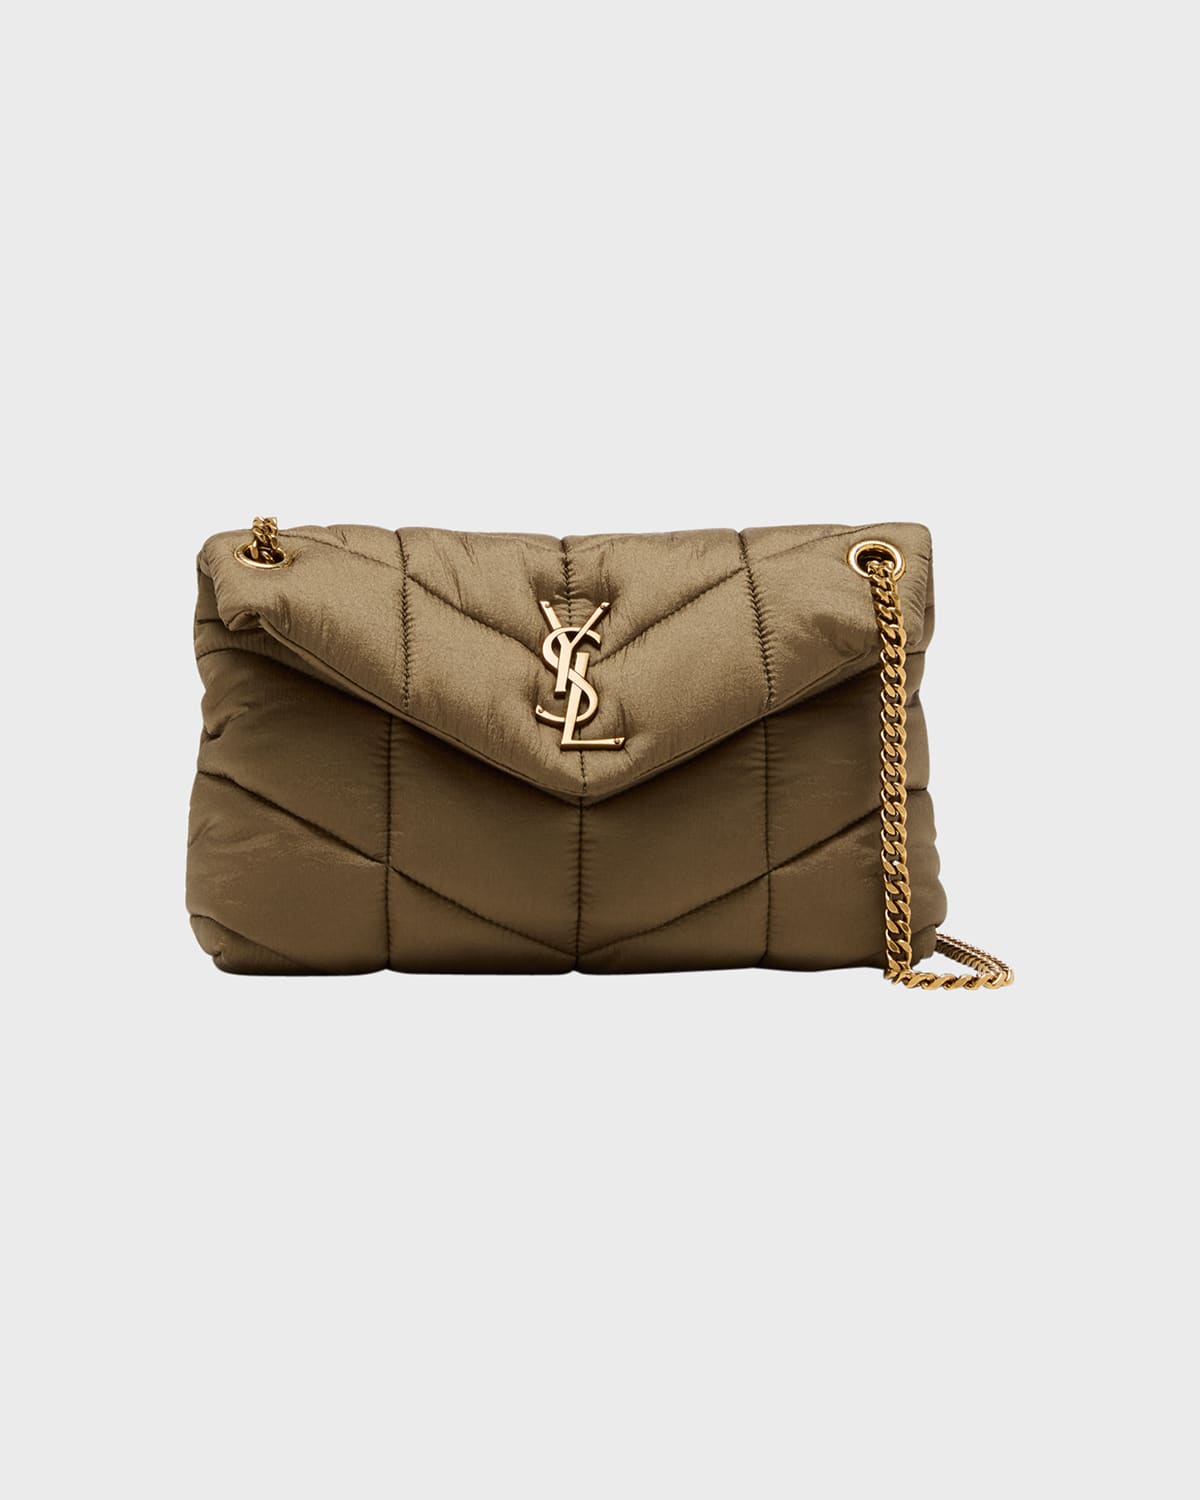 Saint Laurent Small Ysl Quilted Nylon Shoulder Bag